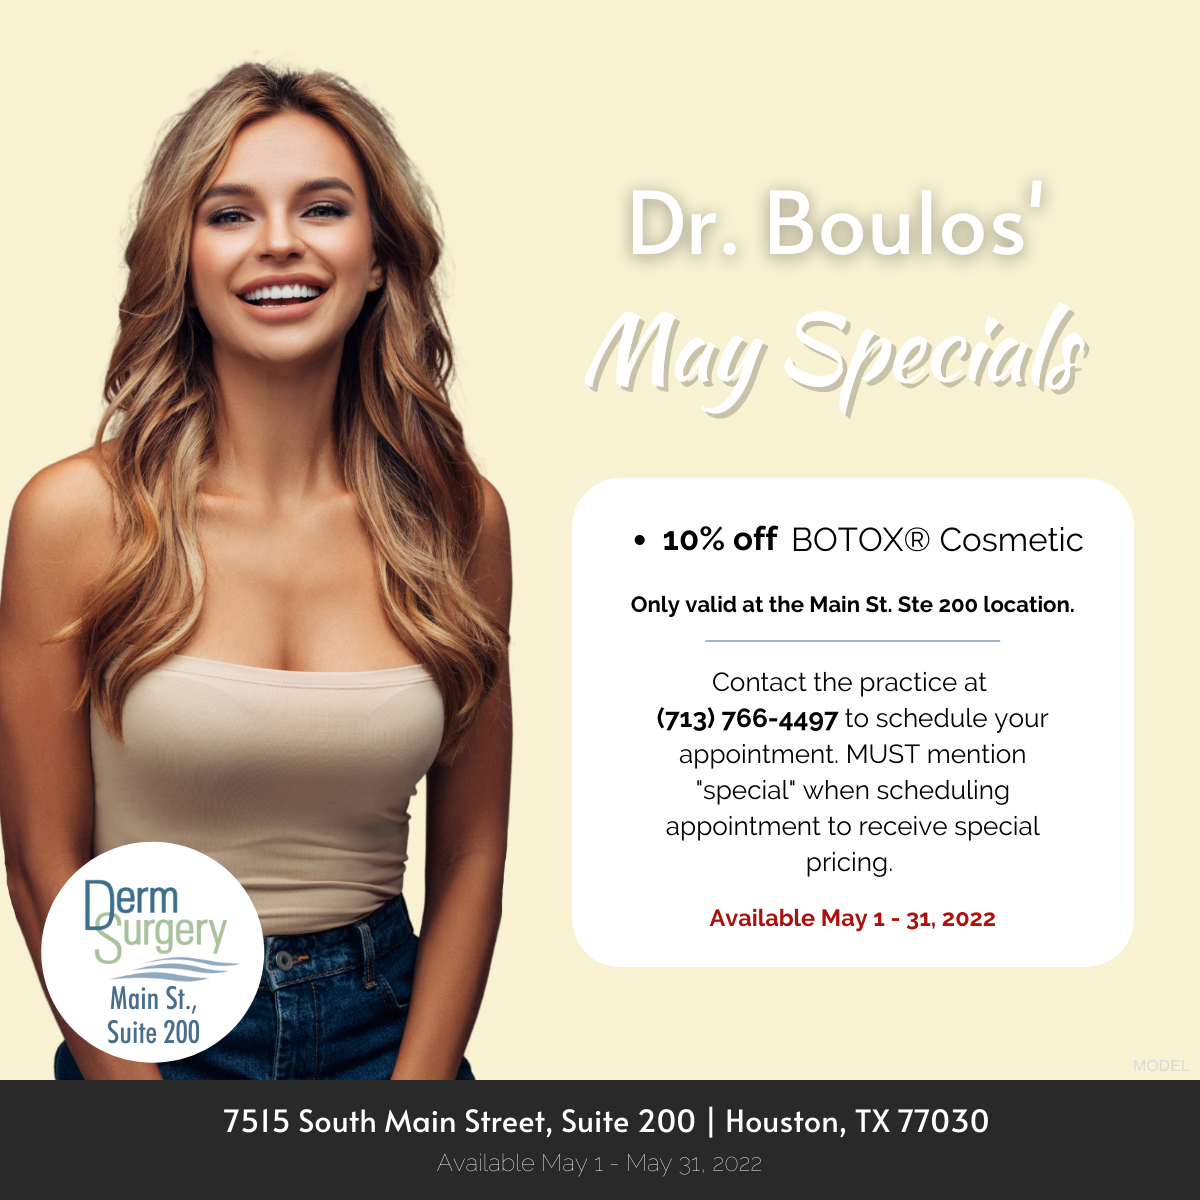 Dr. Boulos' May Specials